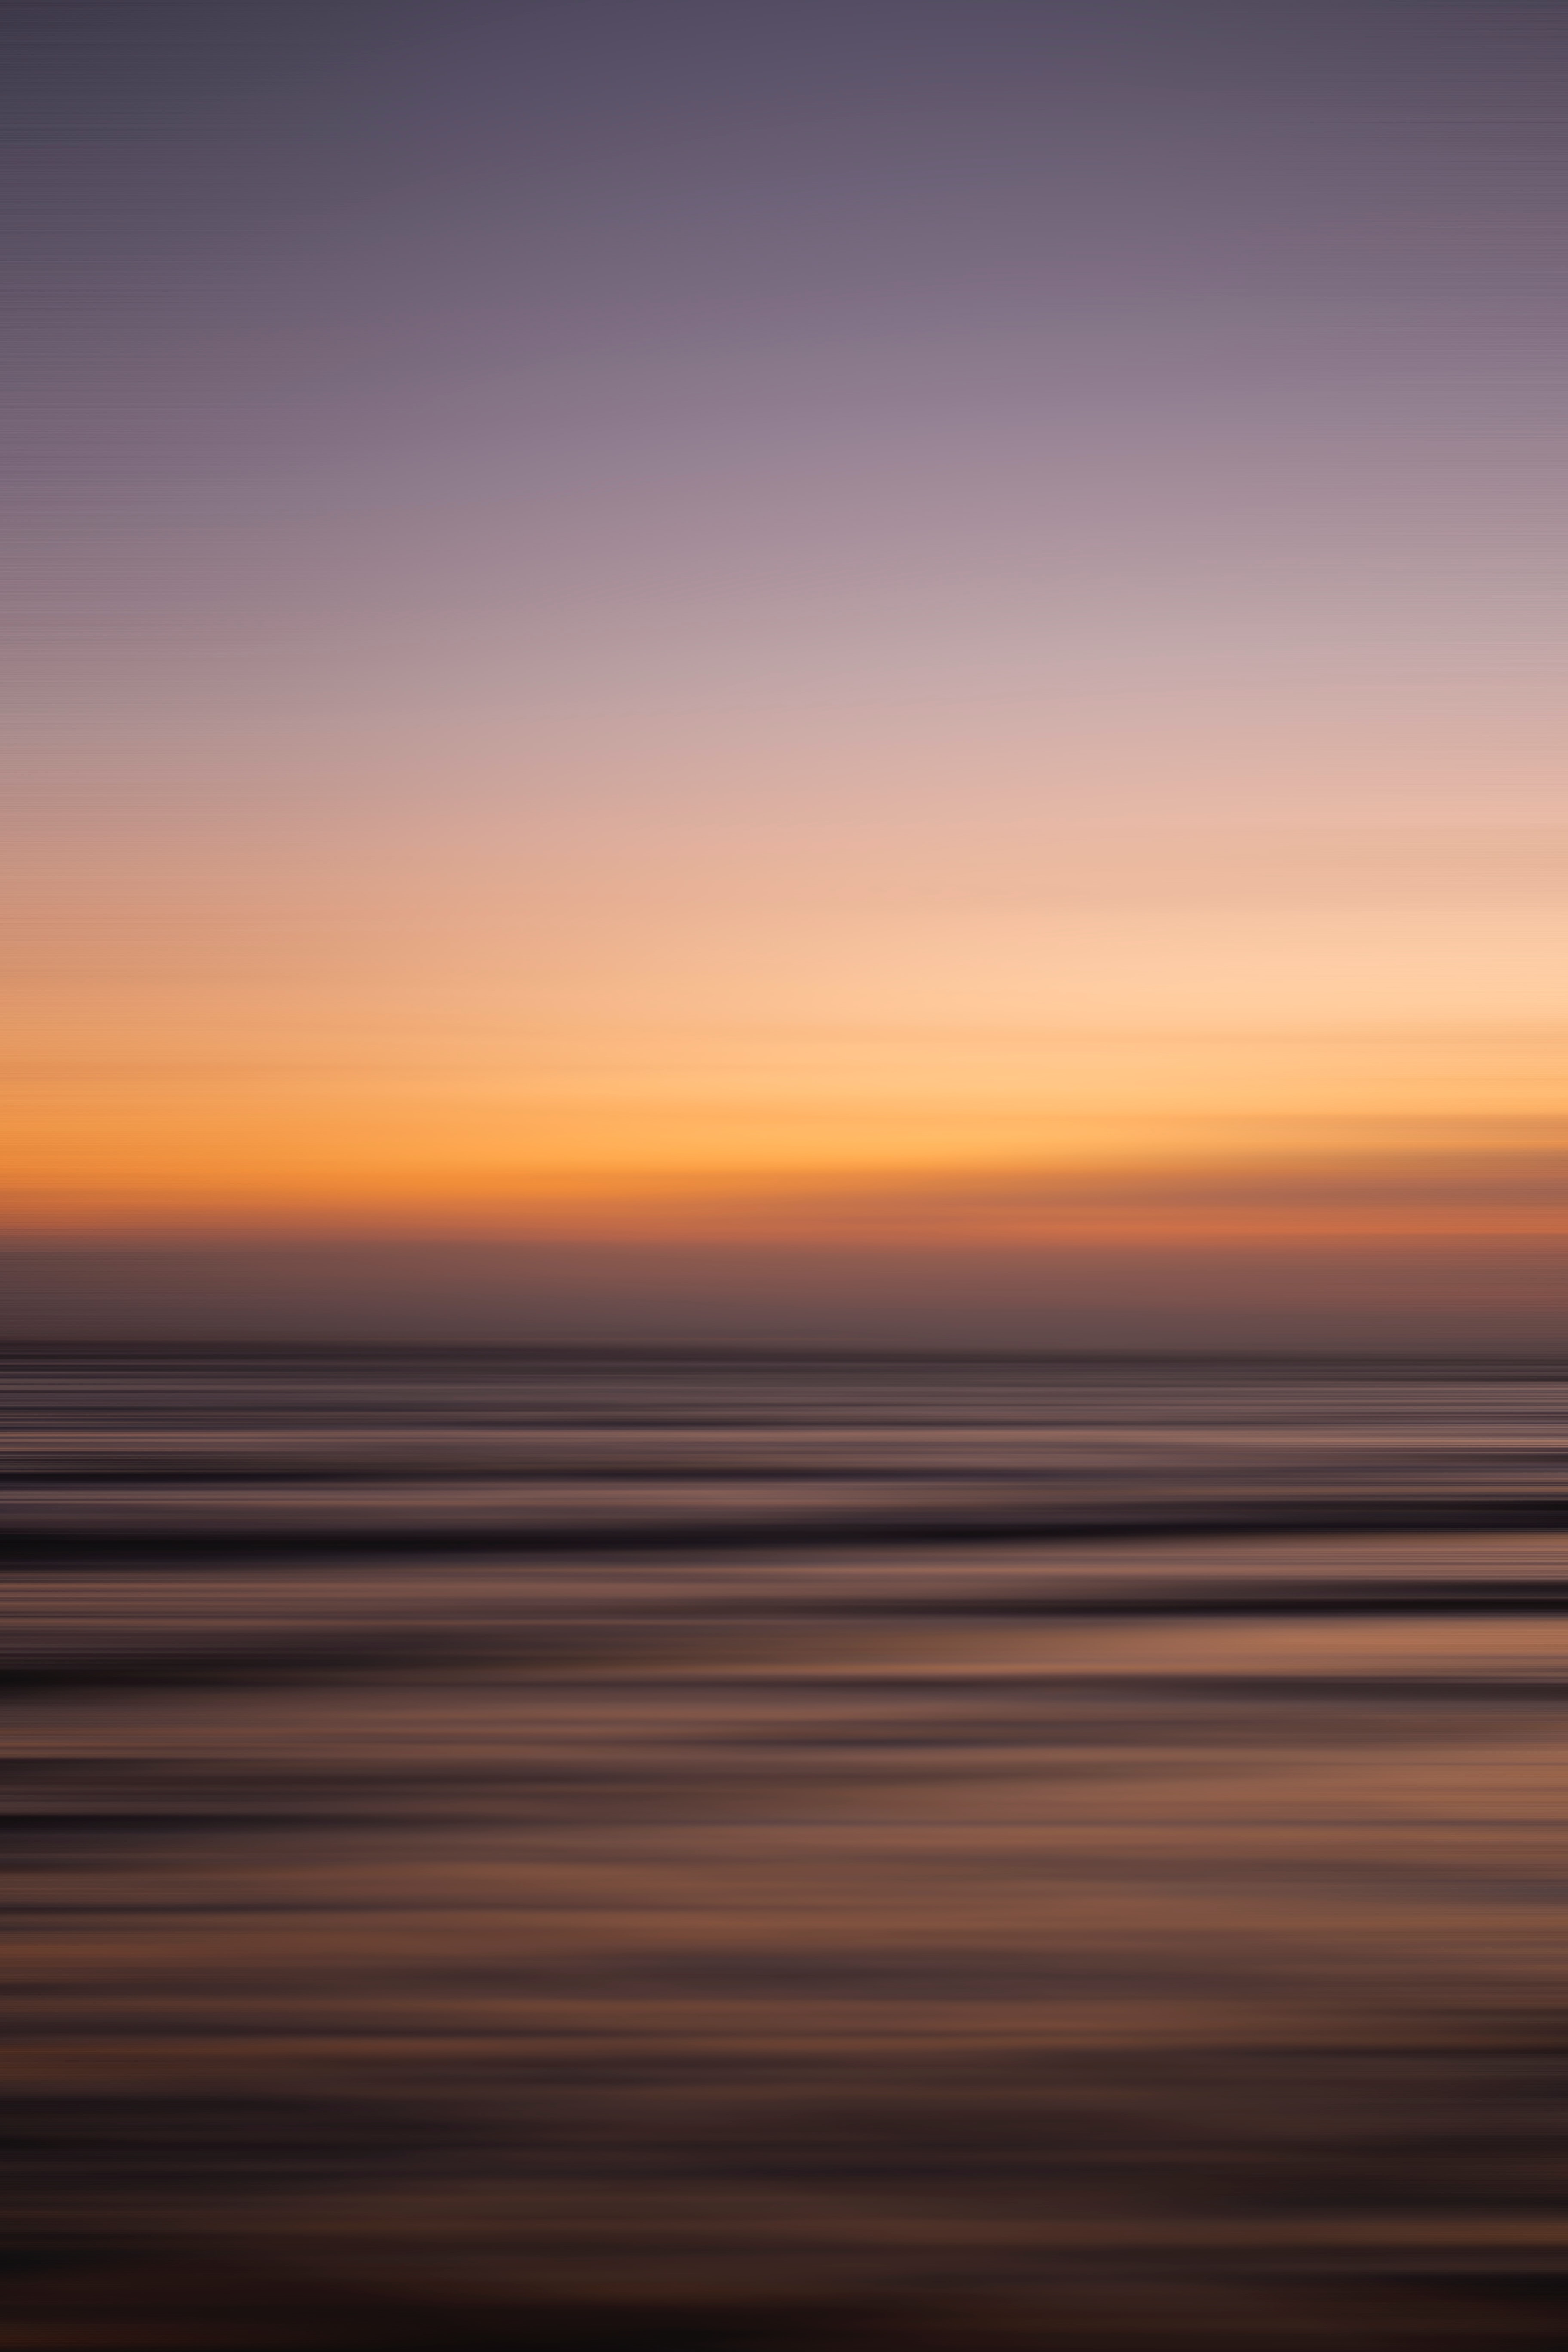 streaks, abstract, blur, sunset, horizon, stripes